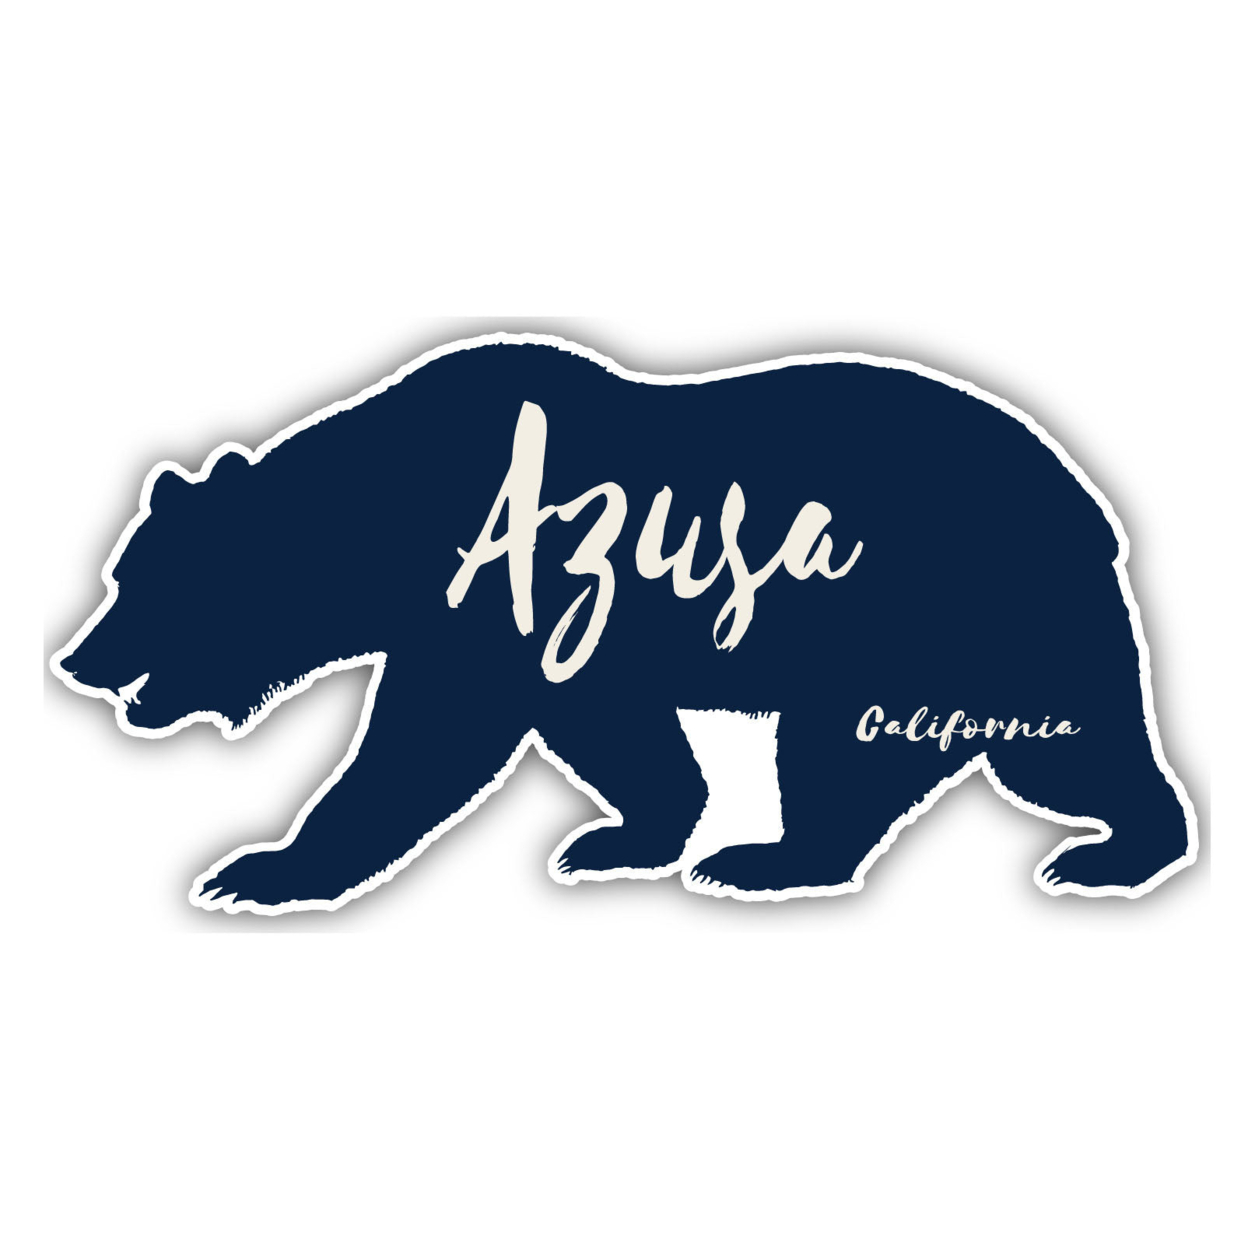 Azusa California Souvenir Decorative Stickers (Choose Theme And Size) - 4-Pack, 2-Inch, Bear